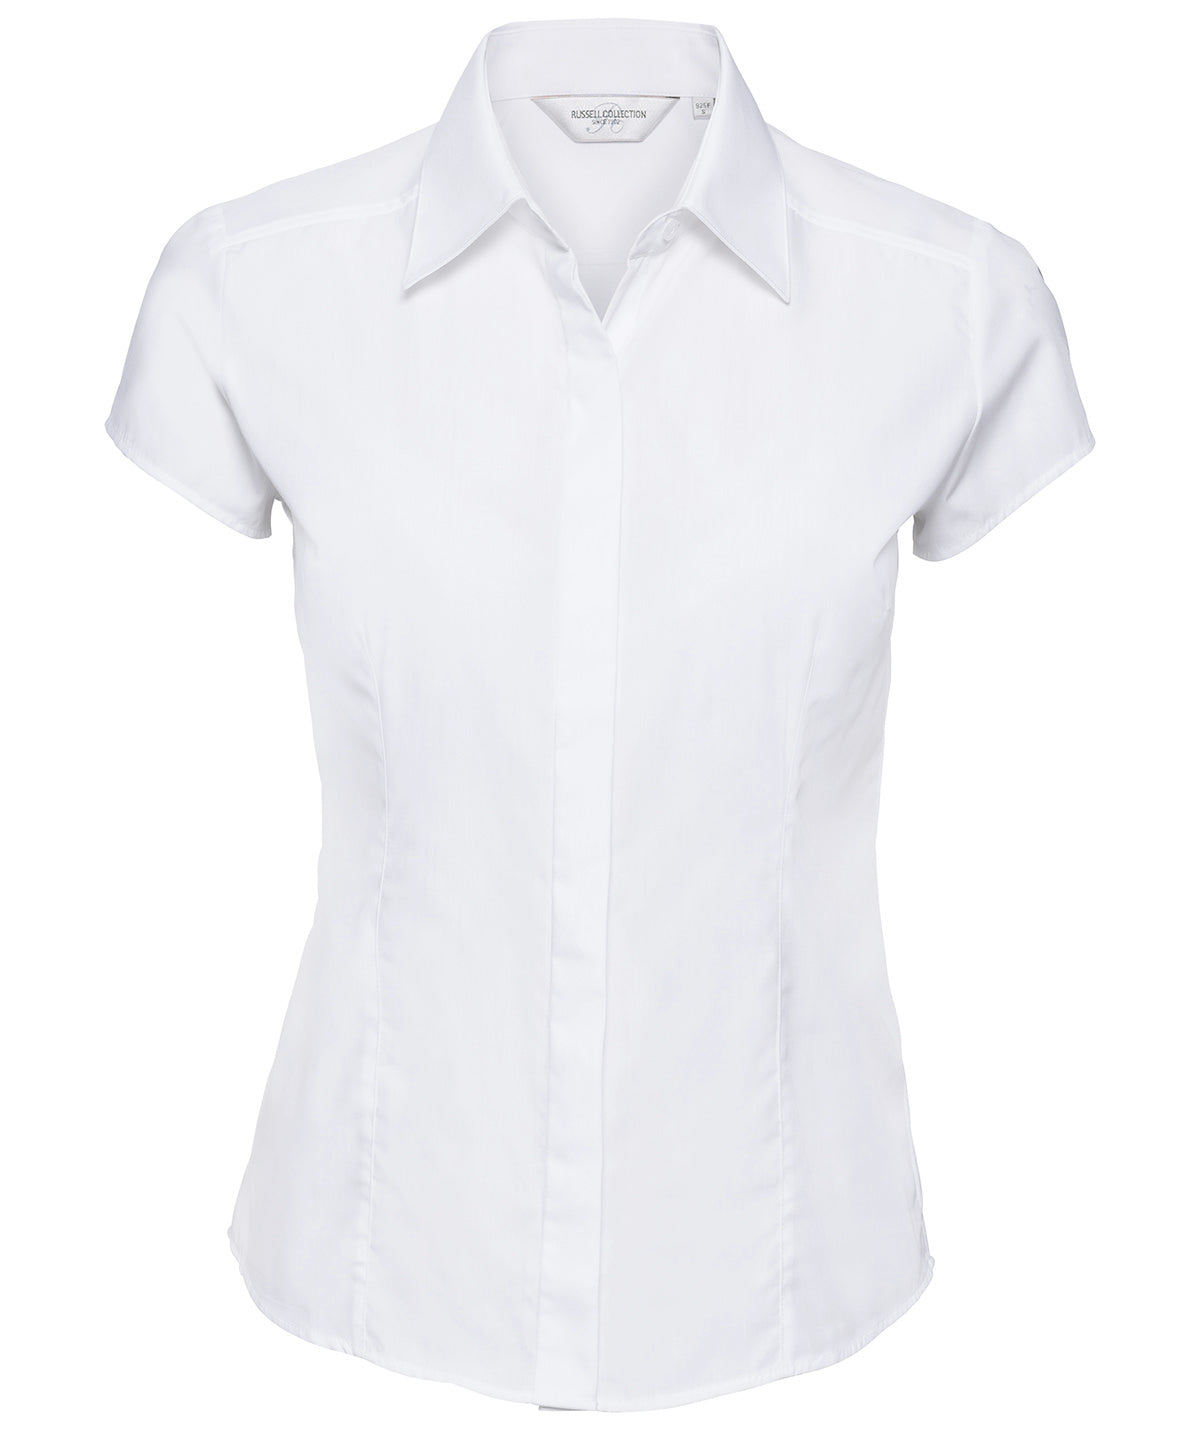 Bolir - Women's Cap Sleeve Polycotton Easycare Fitted Poplin Shirt